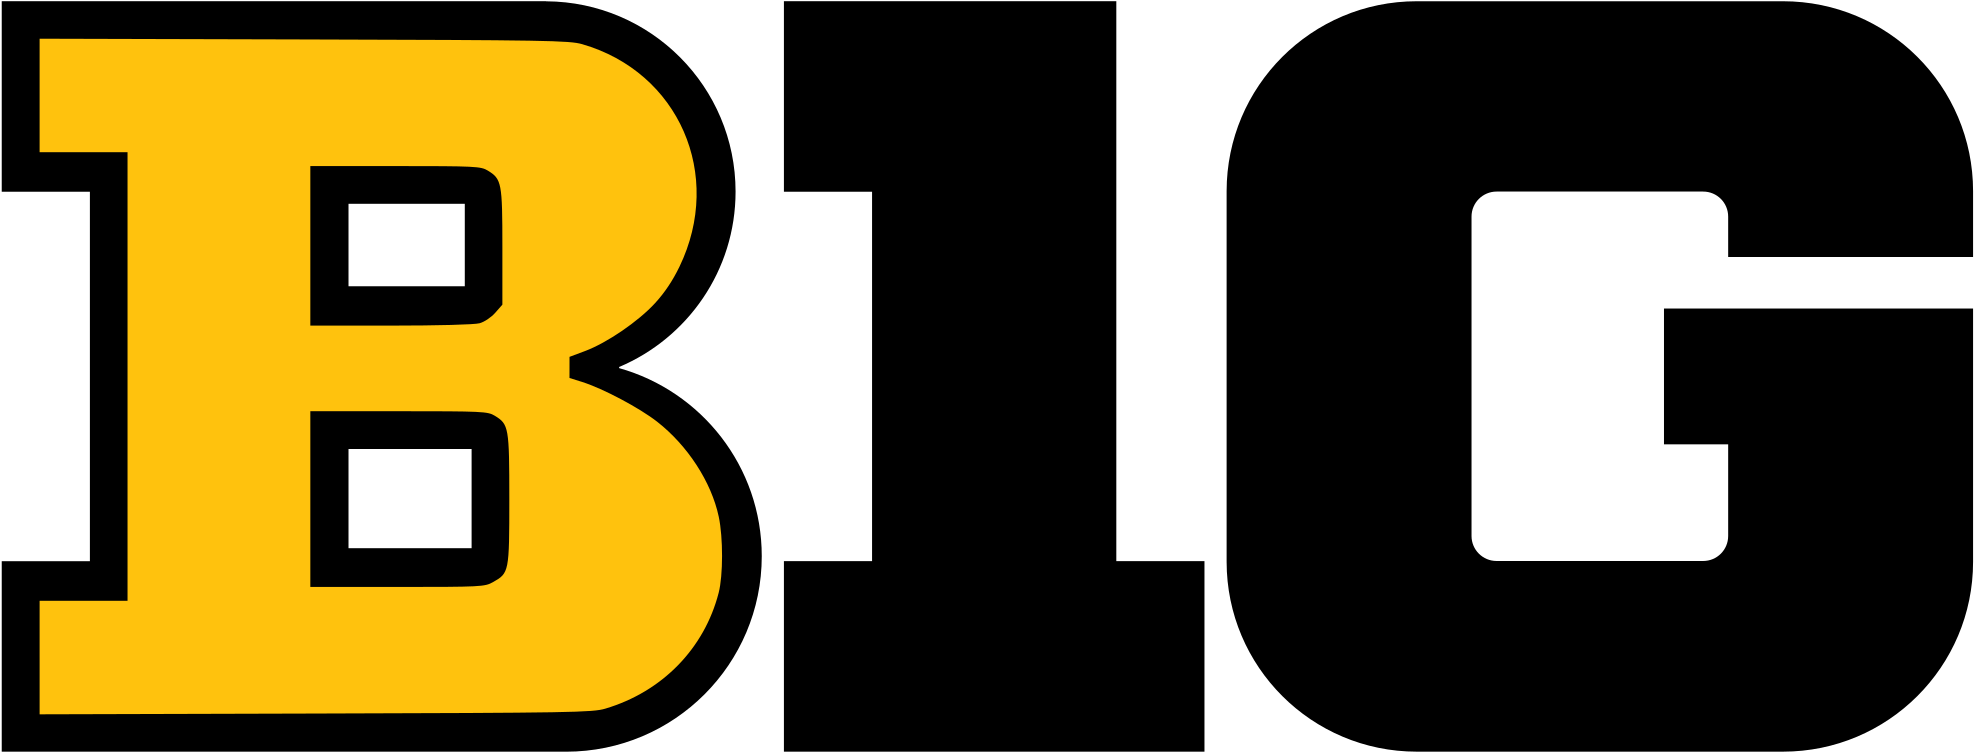 Open - Big Ten Conference Logo (2000x778)